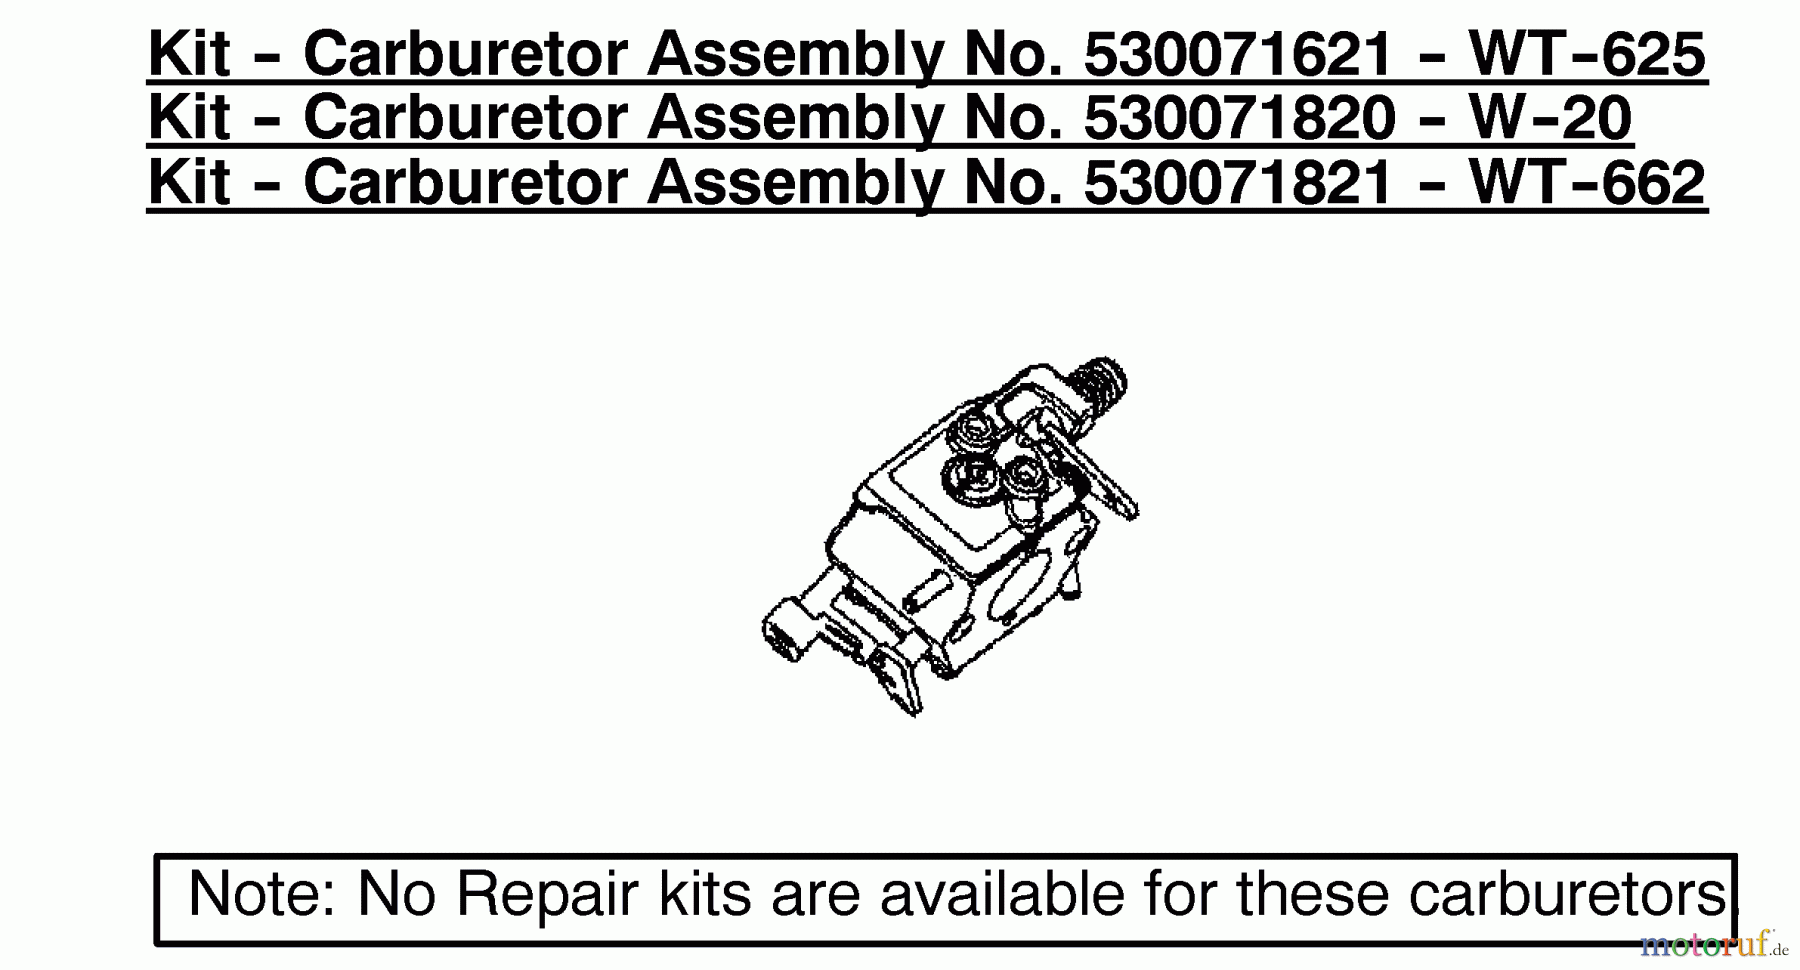  Poulan / Weed Eater Motorsägen 2550 (Type 3) - Poulan Woodmaster Chainsaw Kit - Carburetor Assembly 530071621/530071820/530071821